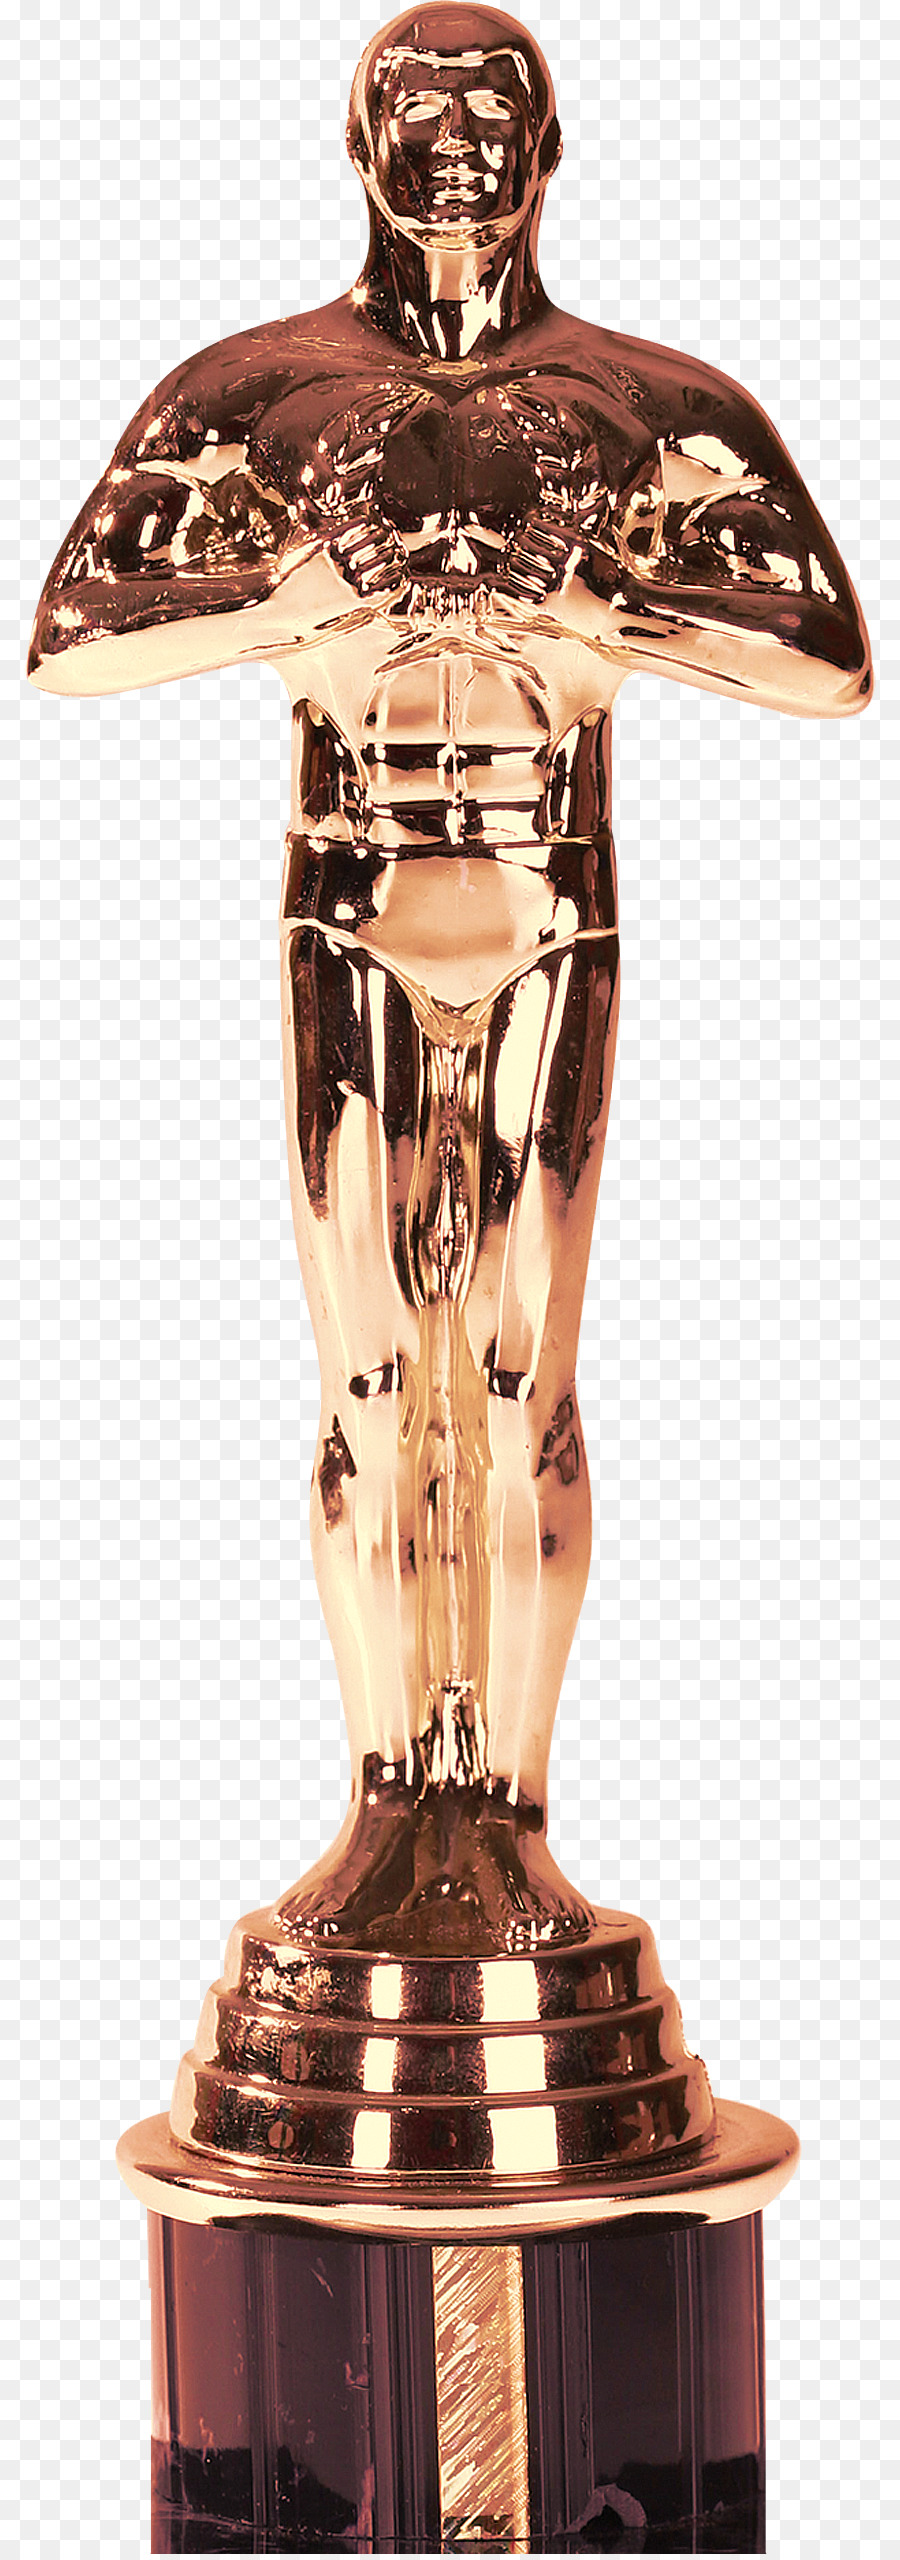 82 ° academy awards - metallizzato sentire,Metallo trofei,Premi